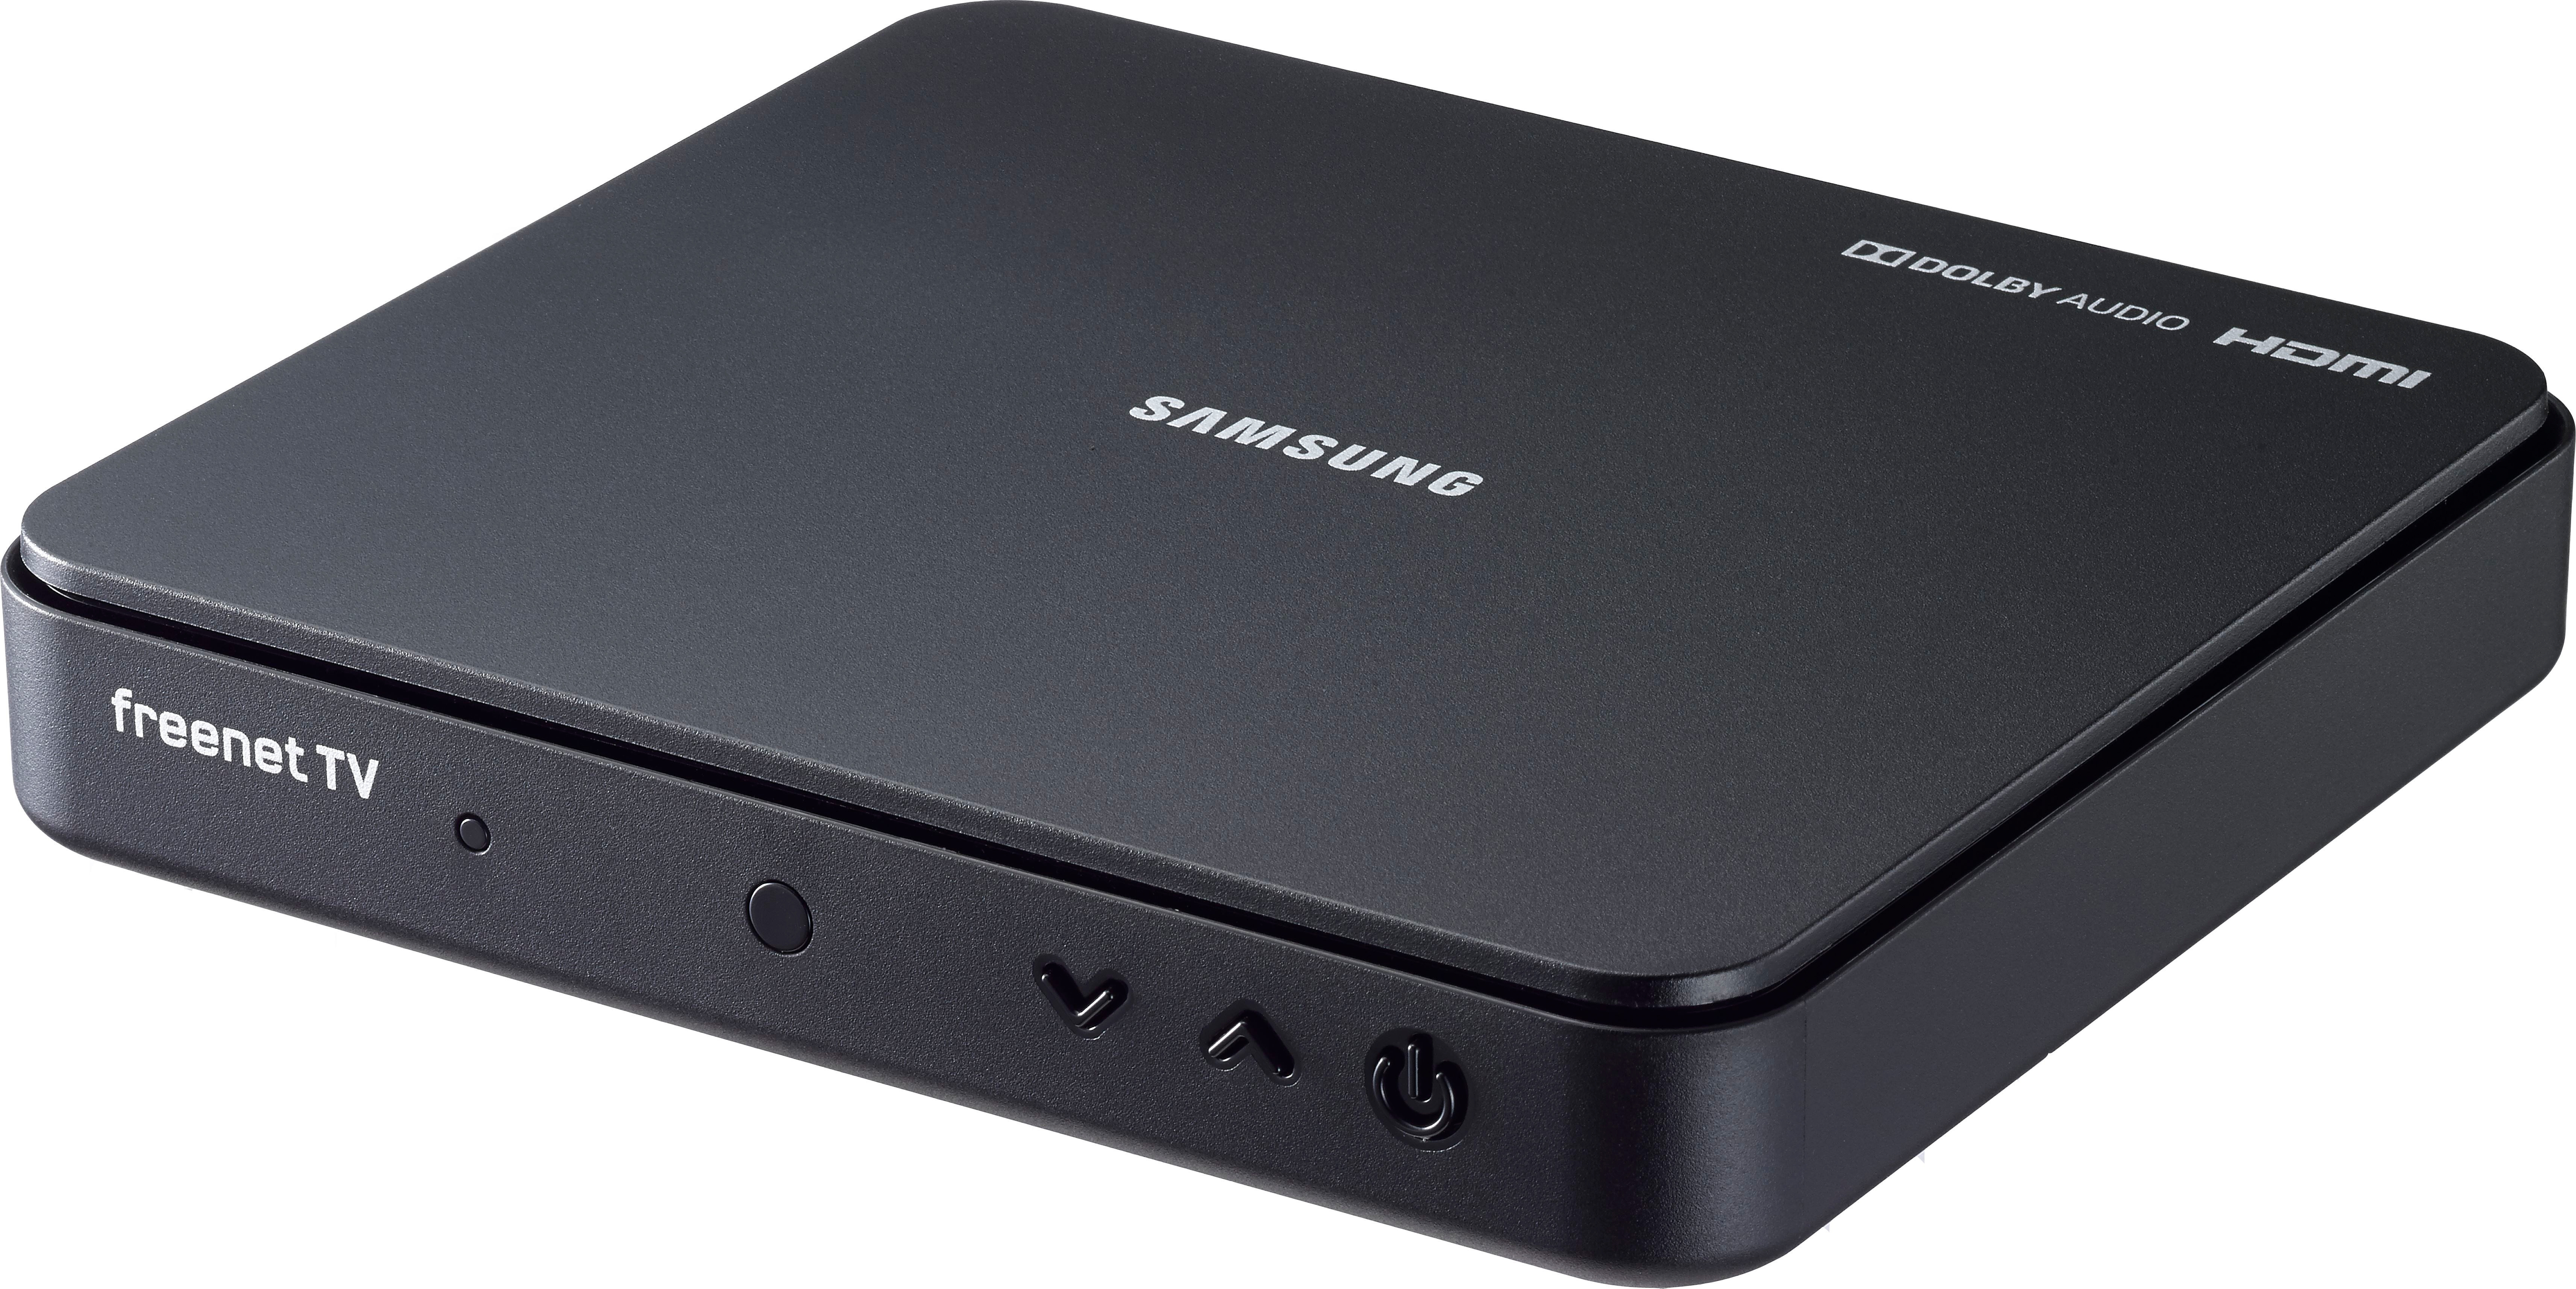 SAMSUNG Paket 12 Monate HD 1 Lite Box TV 3 Receiver GX-MB540TL/ZG IN - DVB-T2 (Schwarz) freenet Media